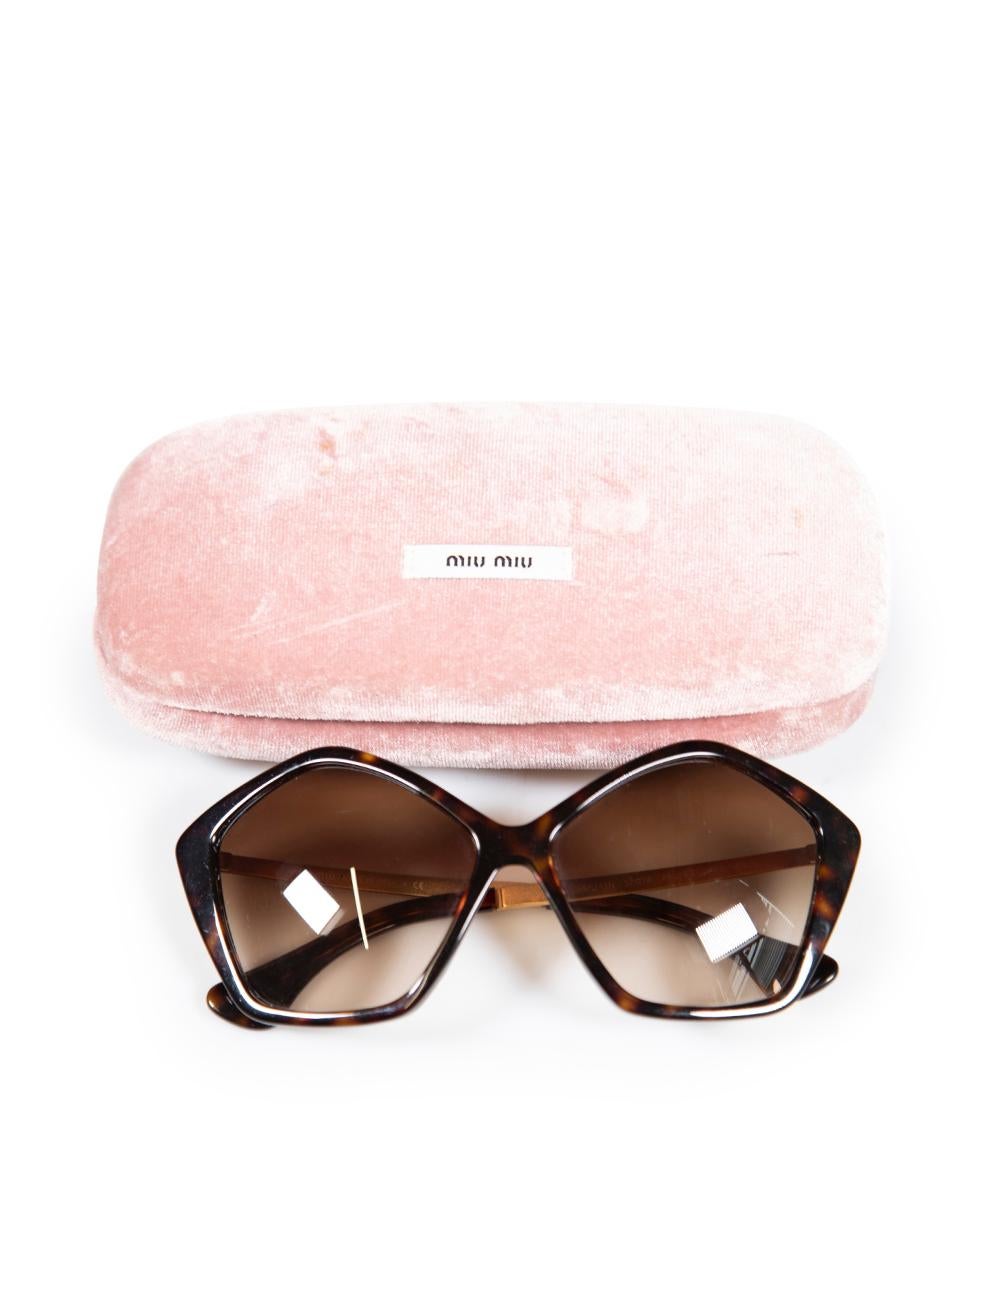 Miu Miu Brown Tortoiseshell Pentagon Frame Tinted Sunglasses For Sale 3